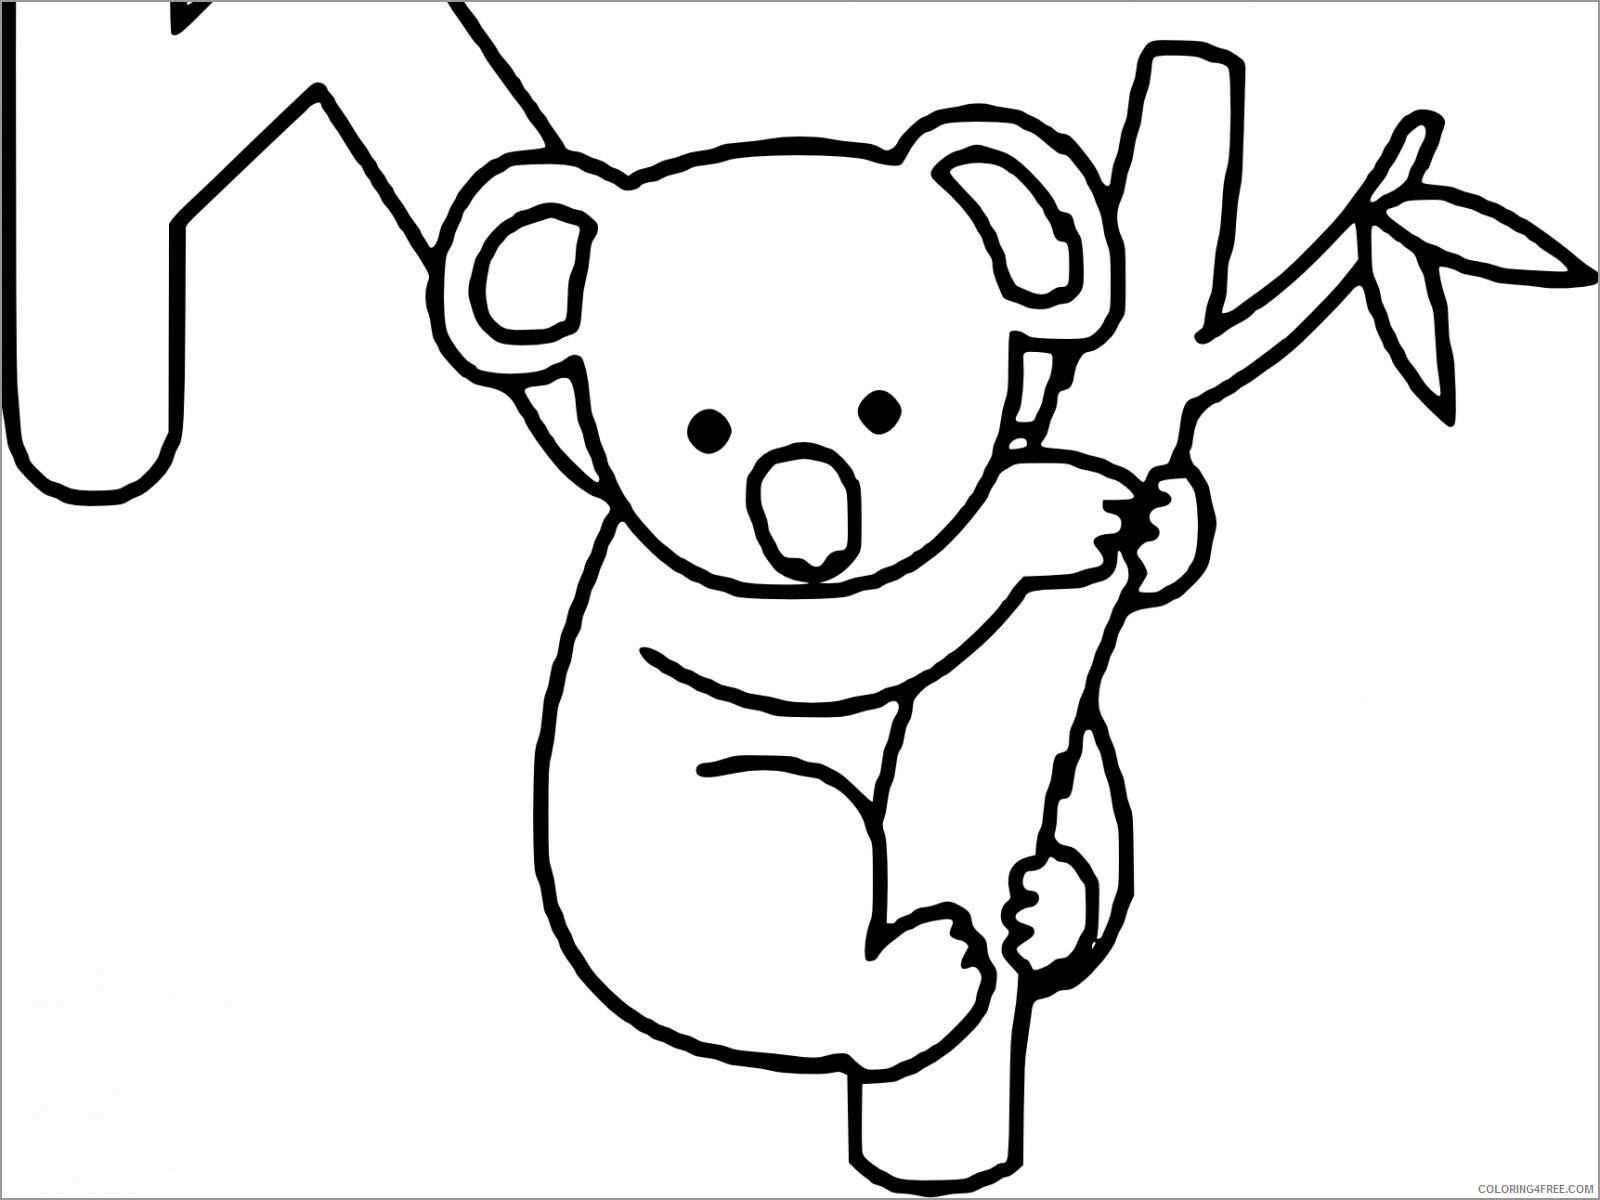 Koala Coloring Pages Animal Printable Sheets cute baby koala 2021 3033 Coloring4free